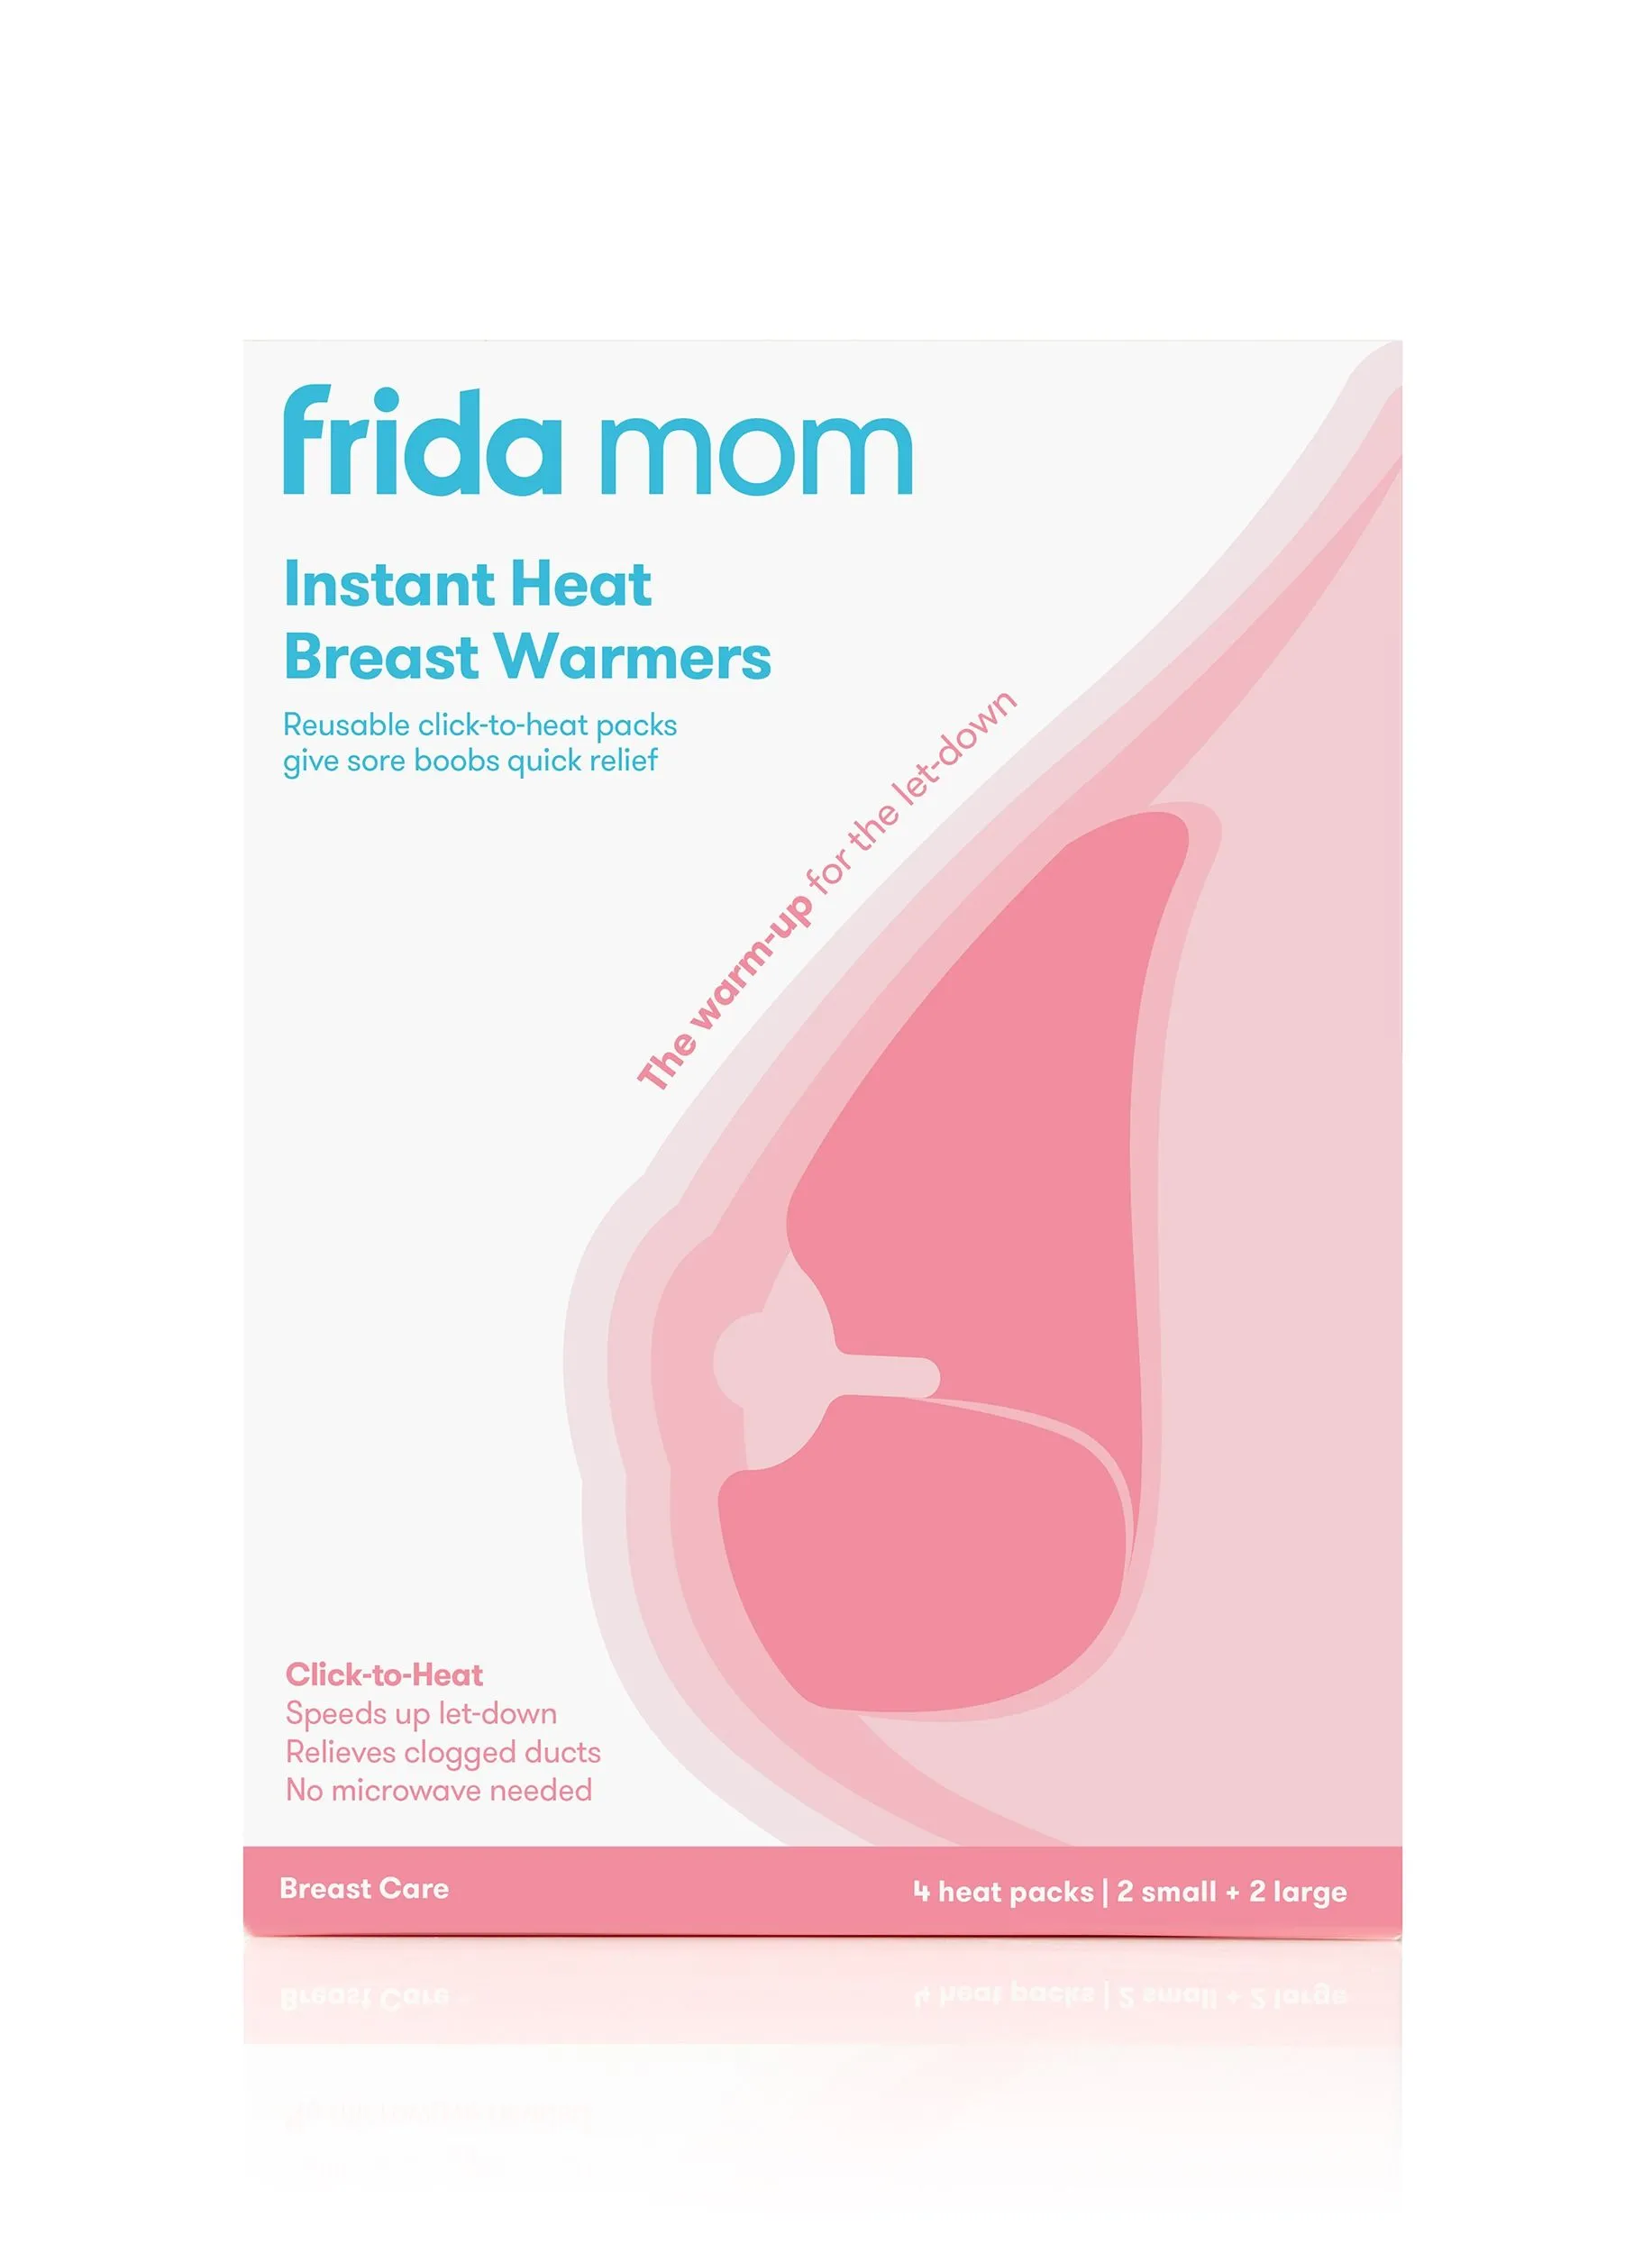 frida mom أجهزة تدفئة الثدي القابلة لإعادة الاستخدام بالحرارة الفورية من frida mom - تخفيف الضغط على الحرارة القابل لإعادة الاستخدام في لحظة للرضاعة + الأمهات الضخ - مجموعتان - 2 عبوات صغيرة + 2 عبوات حرارية كبيرة